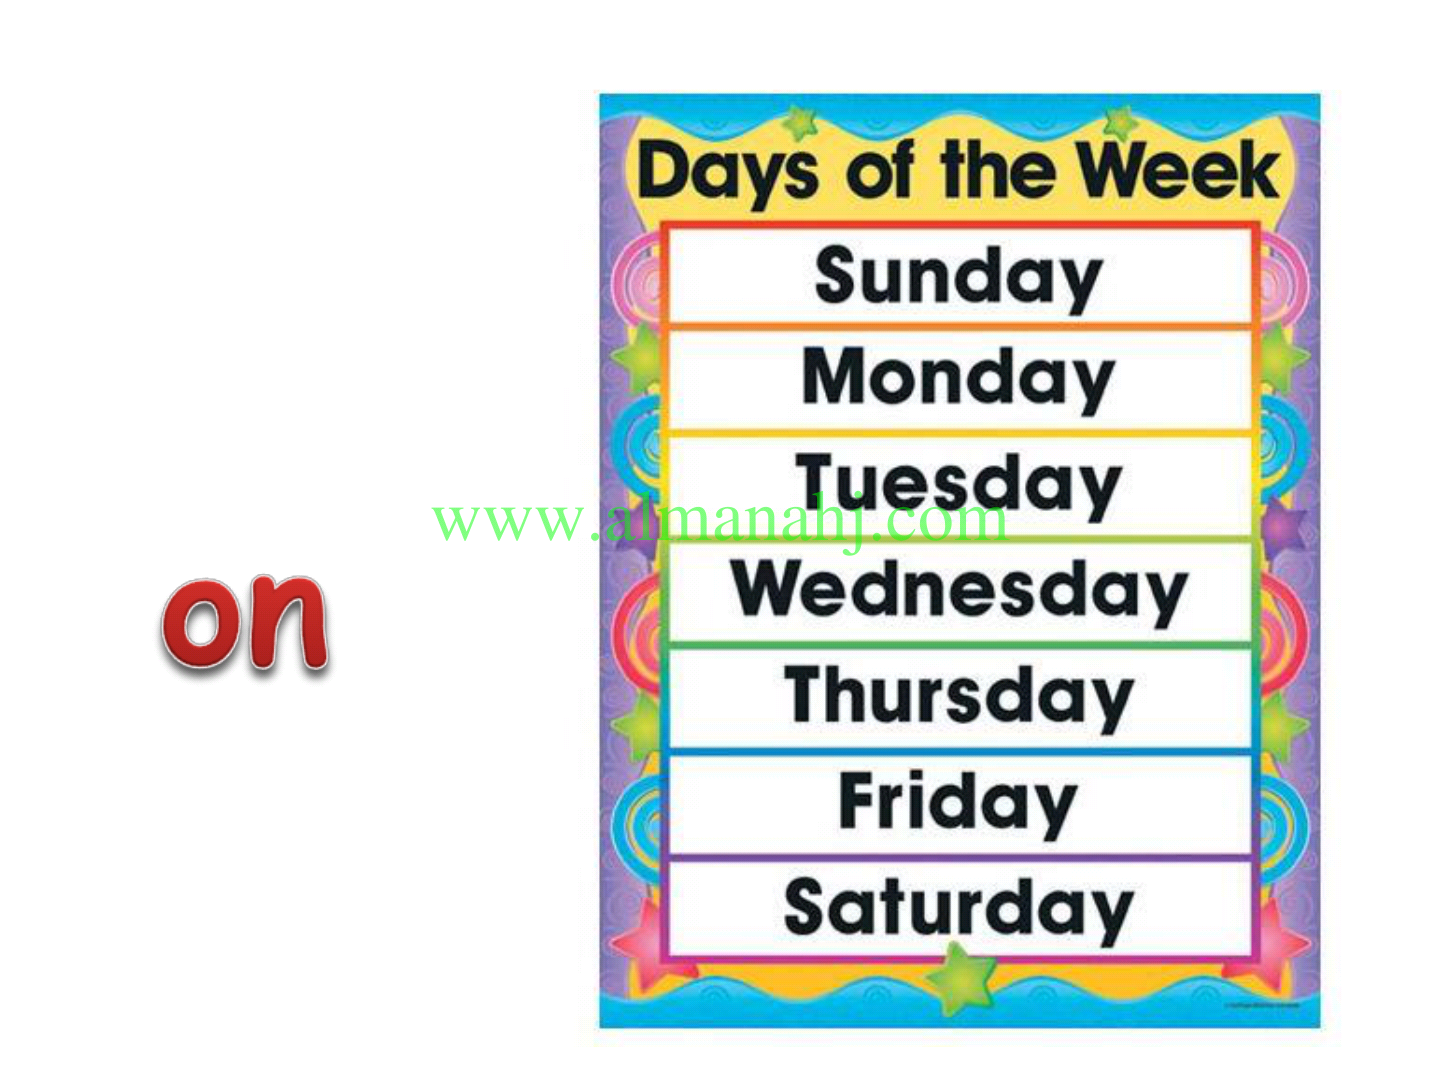 Favourite day of the week. Недели на английском. Закладка дни недели на английском. Название дней недели на английском. Карточки с днями недели на английском.